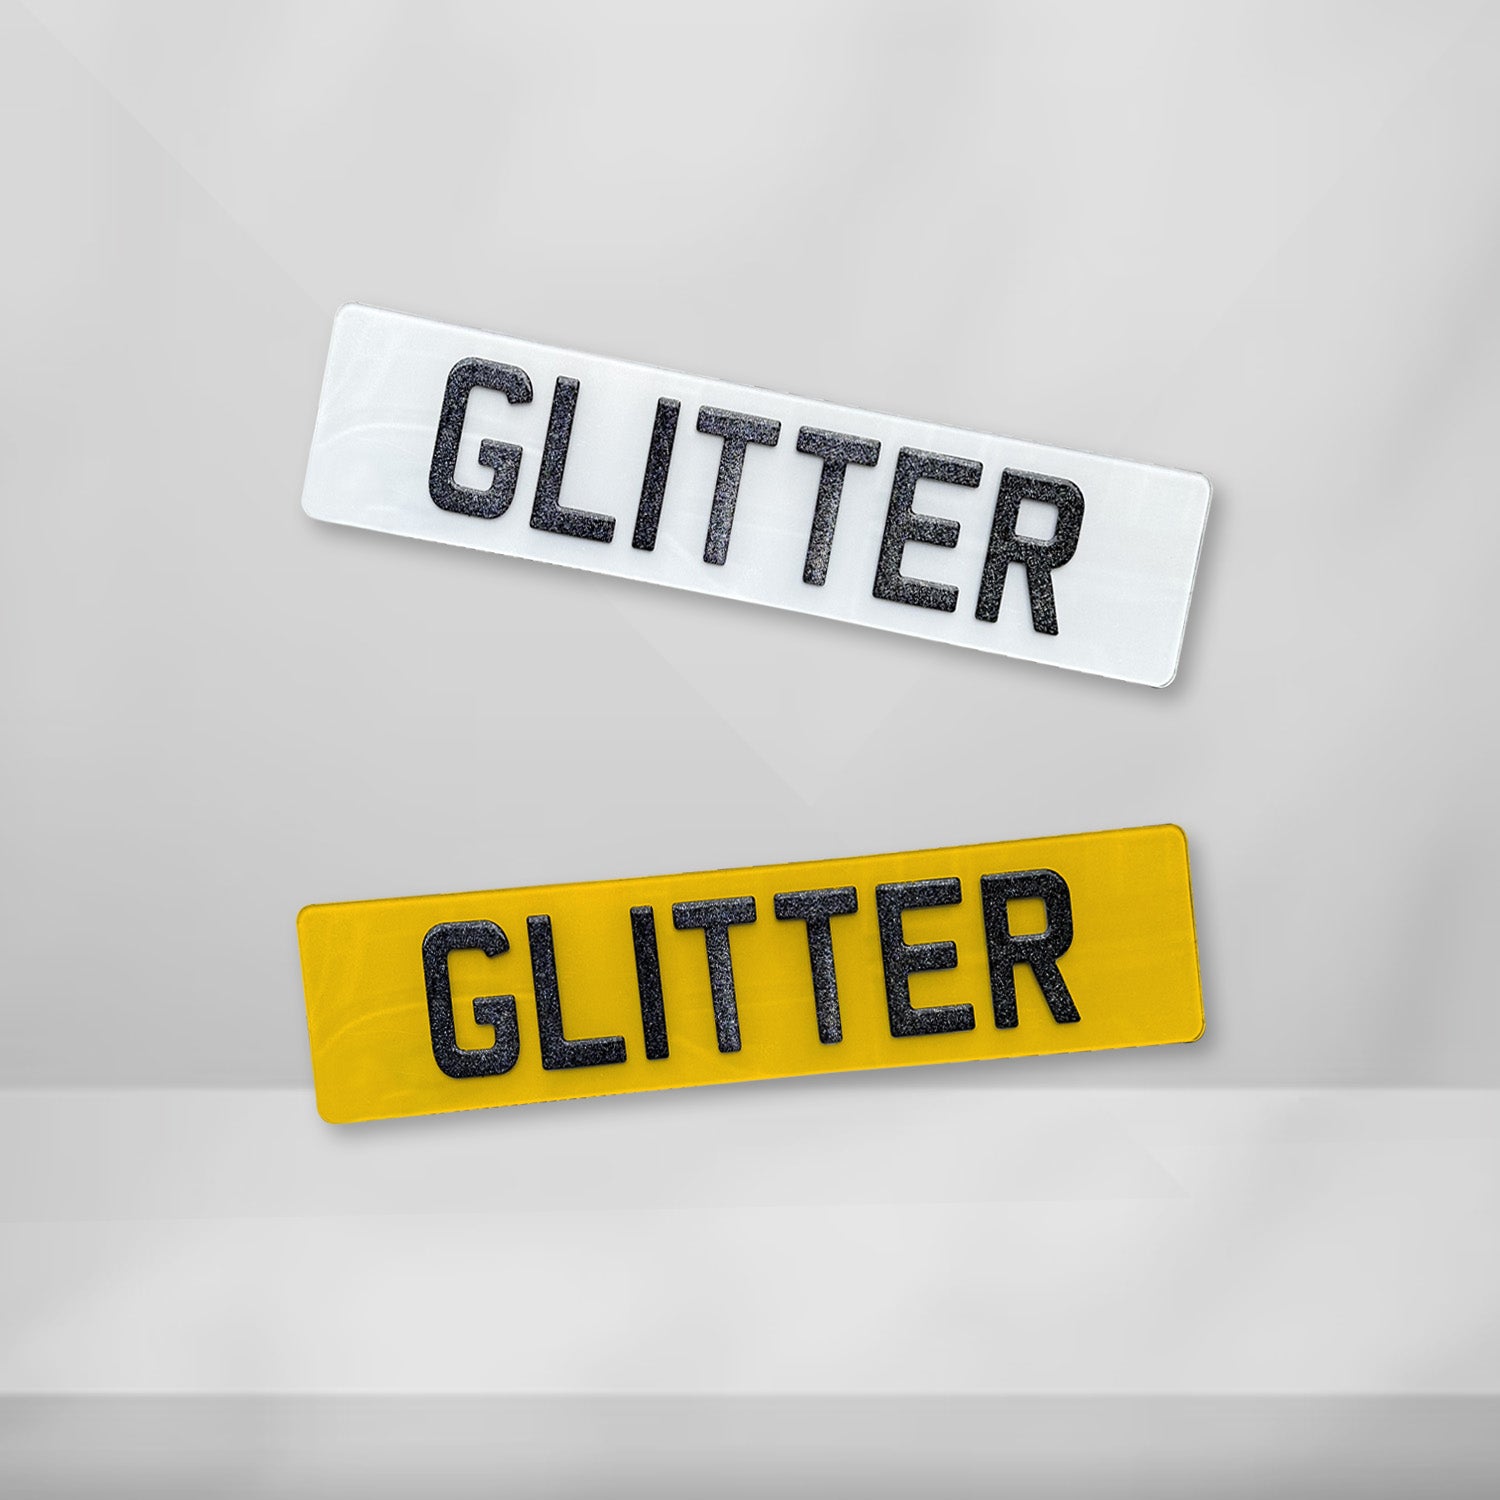 3D Gel Glitter Number Plate